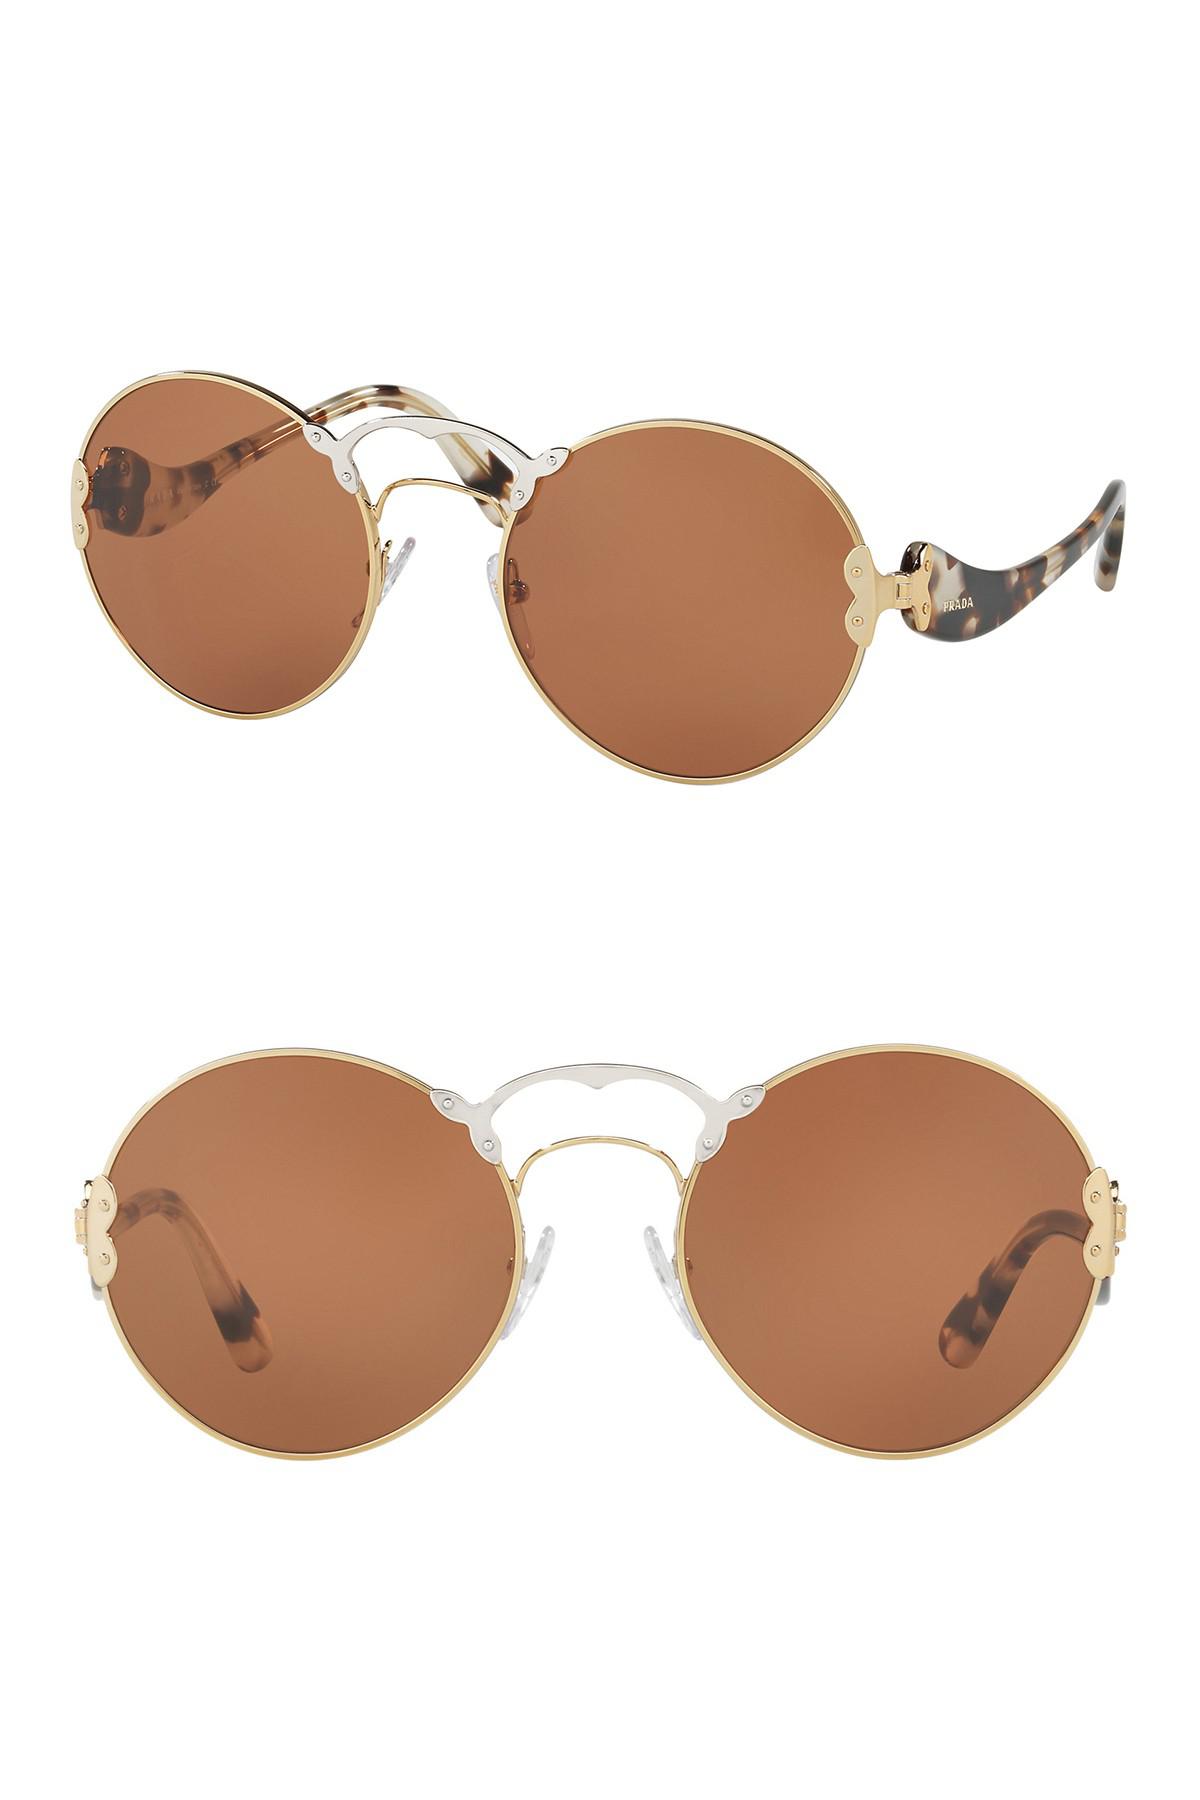 prada round catwalk sunglasses